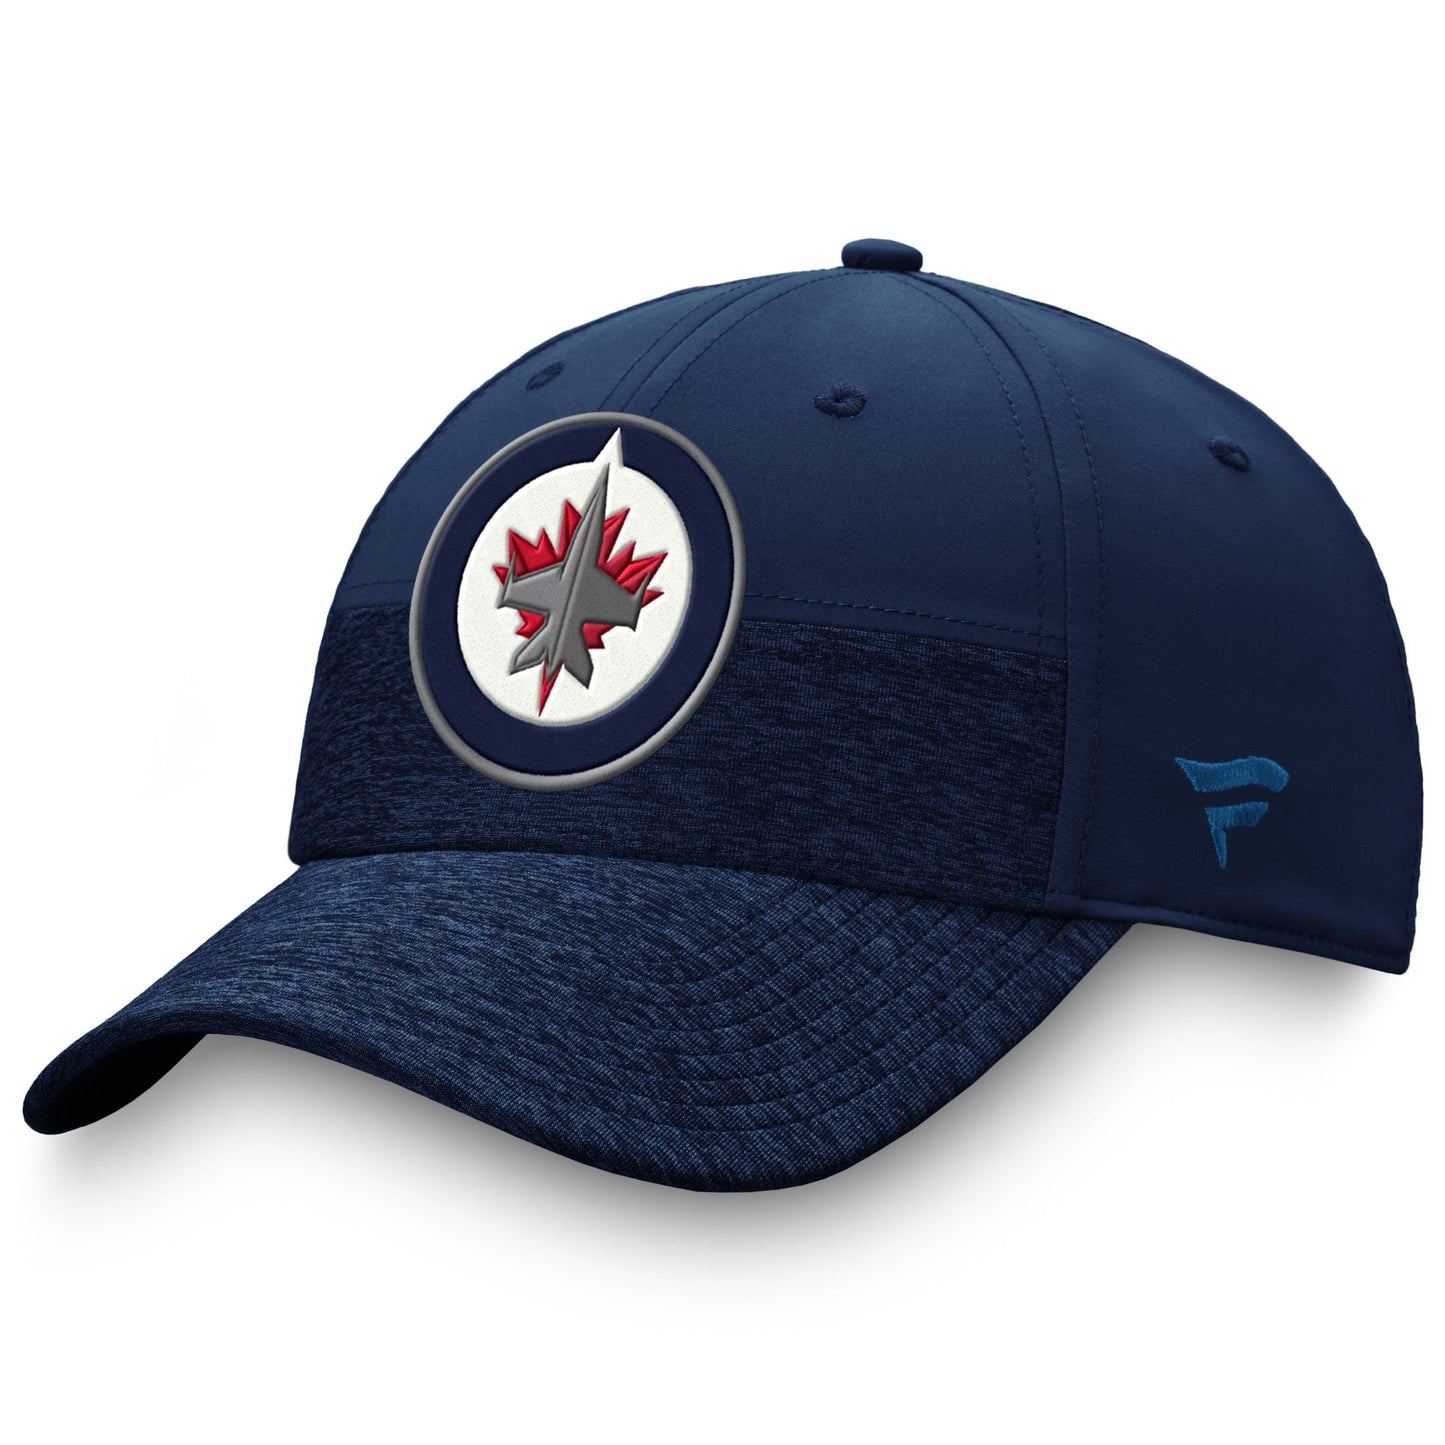 Men's Fanatics Branded Navy Winnipeg Jets Authentic Pro Locker Room 2-Tone Flex Hat